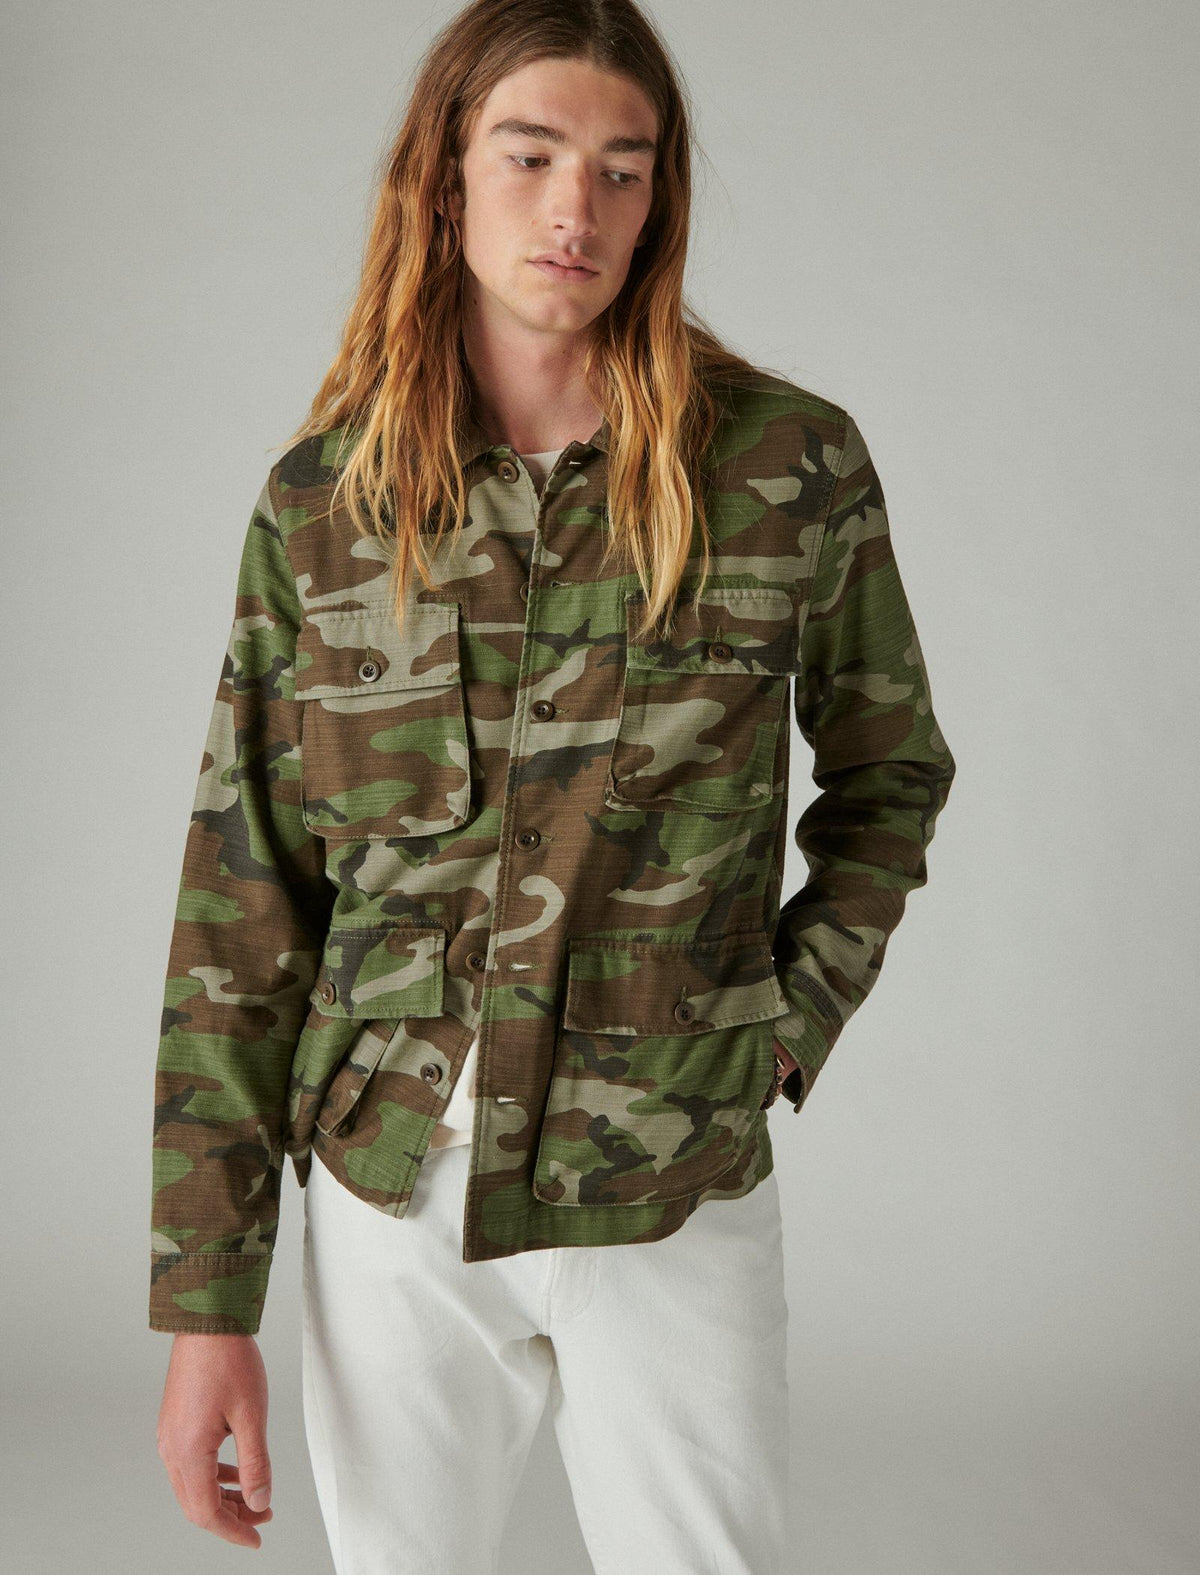 Lucky Brand Slub Twill Military Jacket - Men's Clothing Outerwear Jackets Coats Camo (Army Colors)